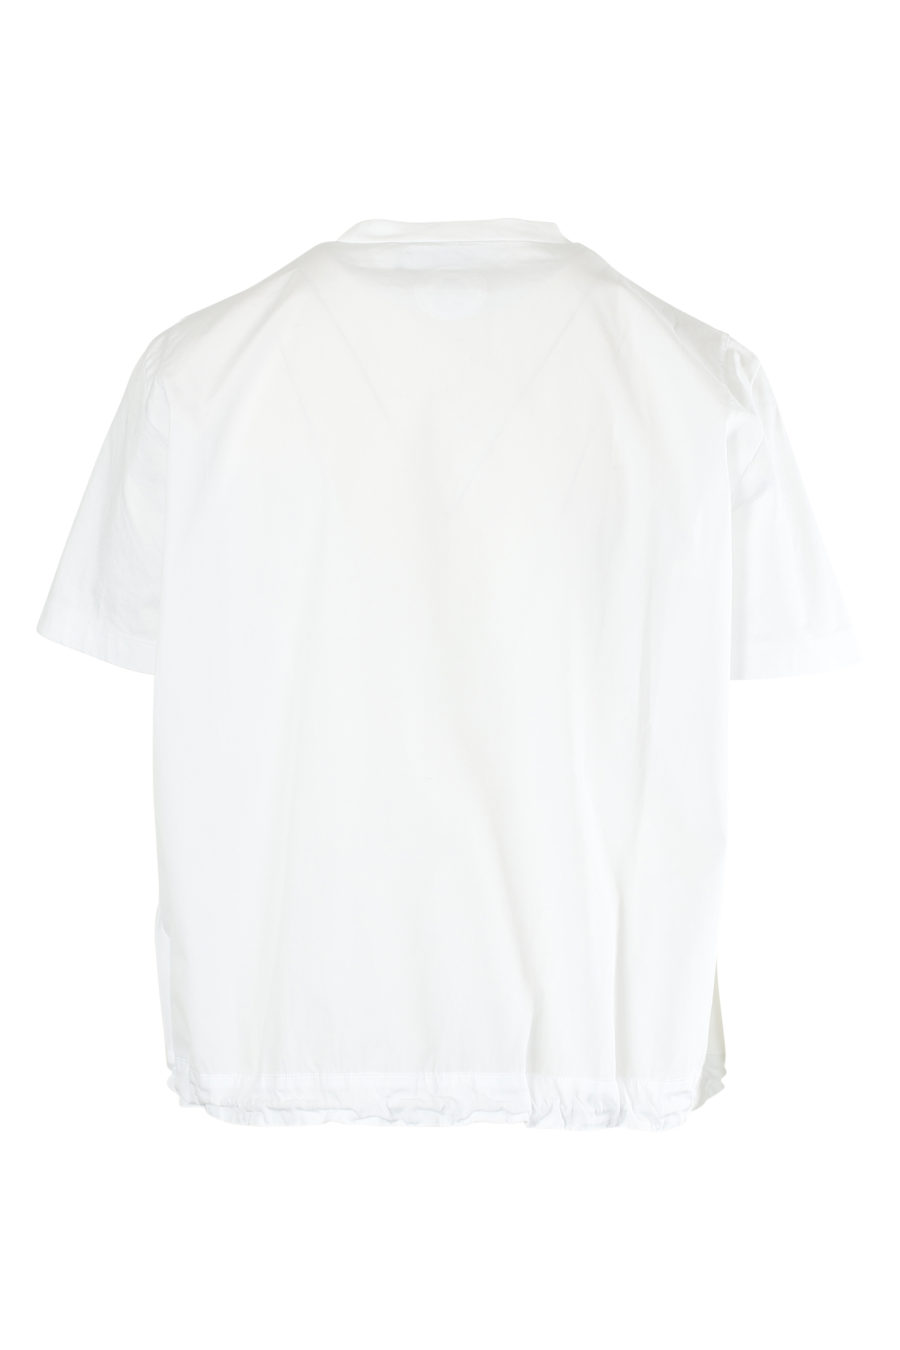 Adjustable white T-shirt "Icon" graffiti - IMG 5464